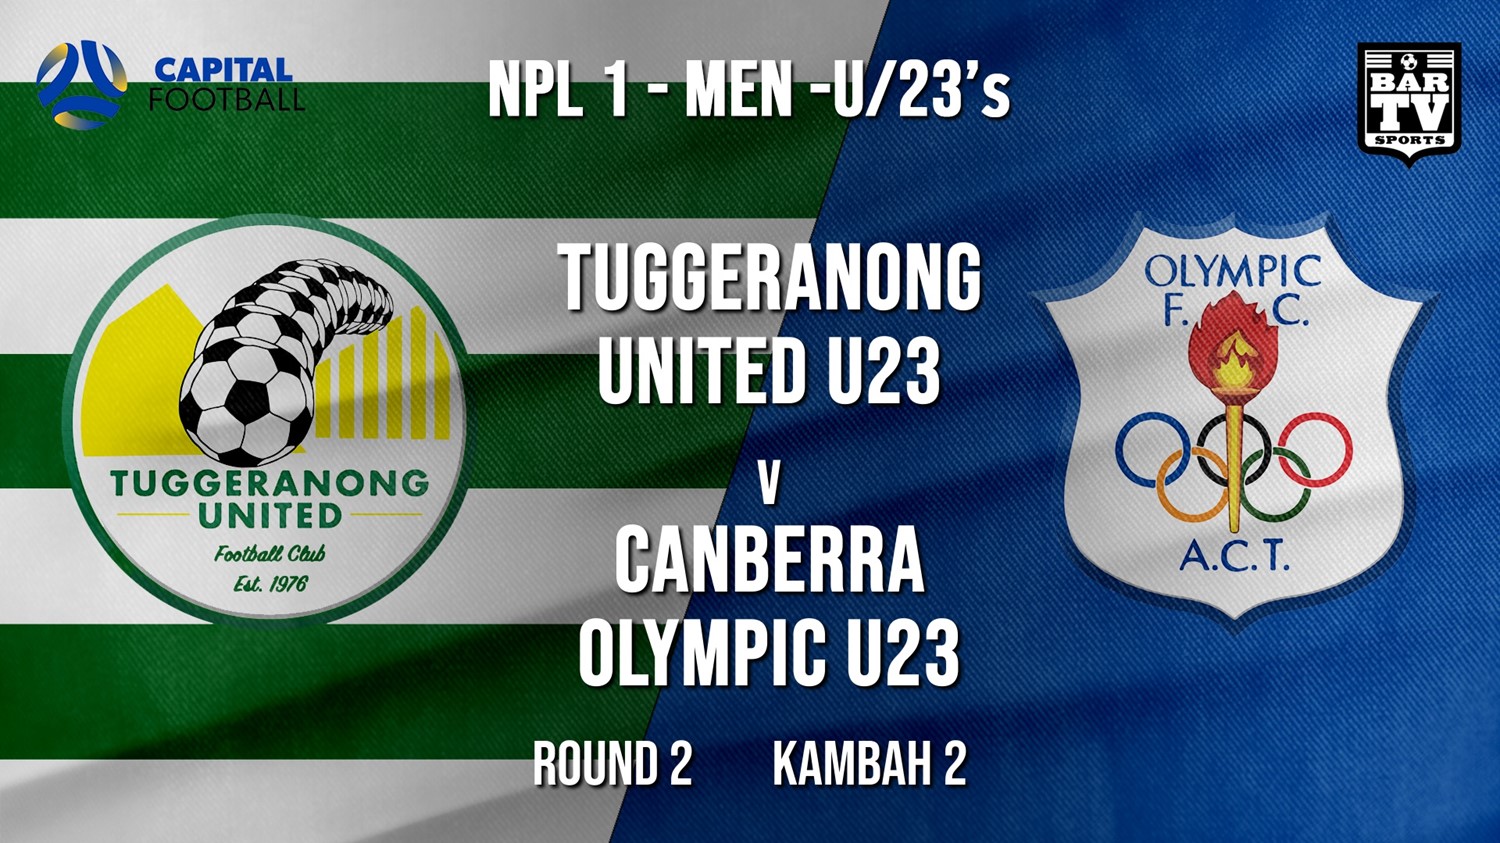 NPL1 Men - U23 - Capital Football  Round 2 - Tuggeranong United U23 v Canberra Olympic U23 Minigame Slate Image